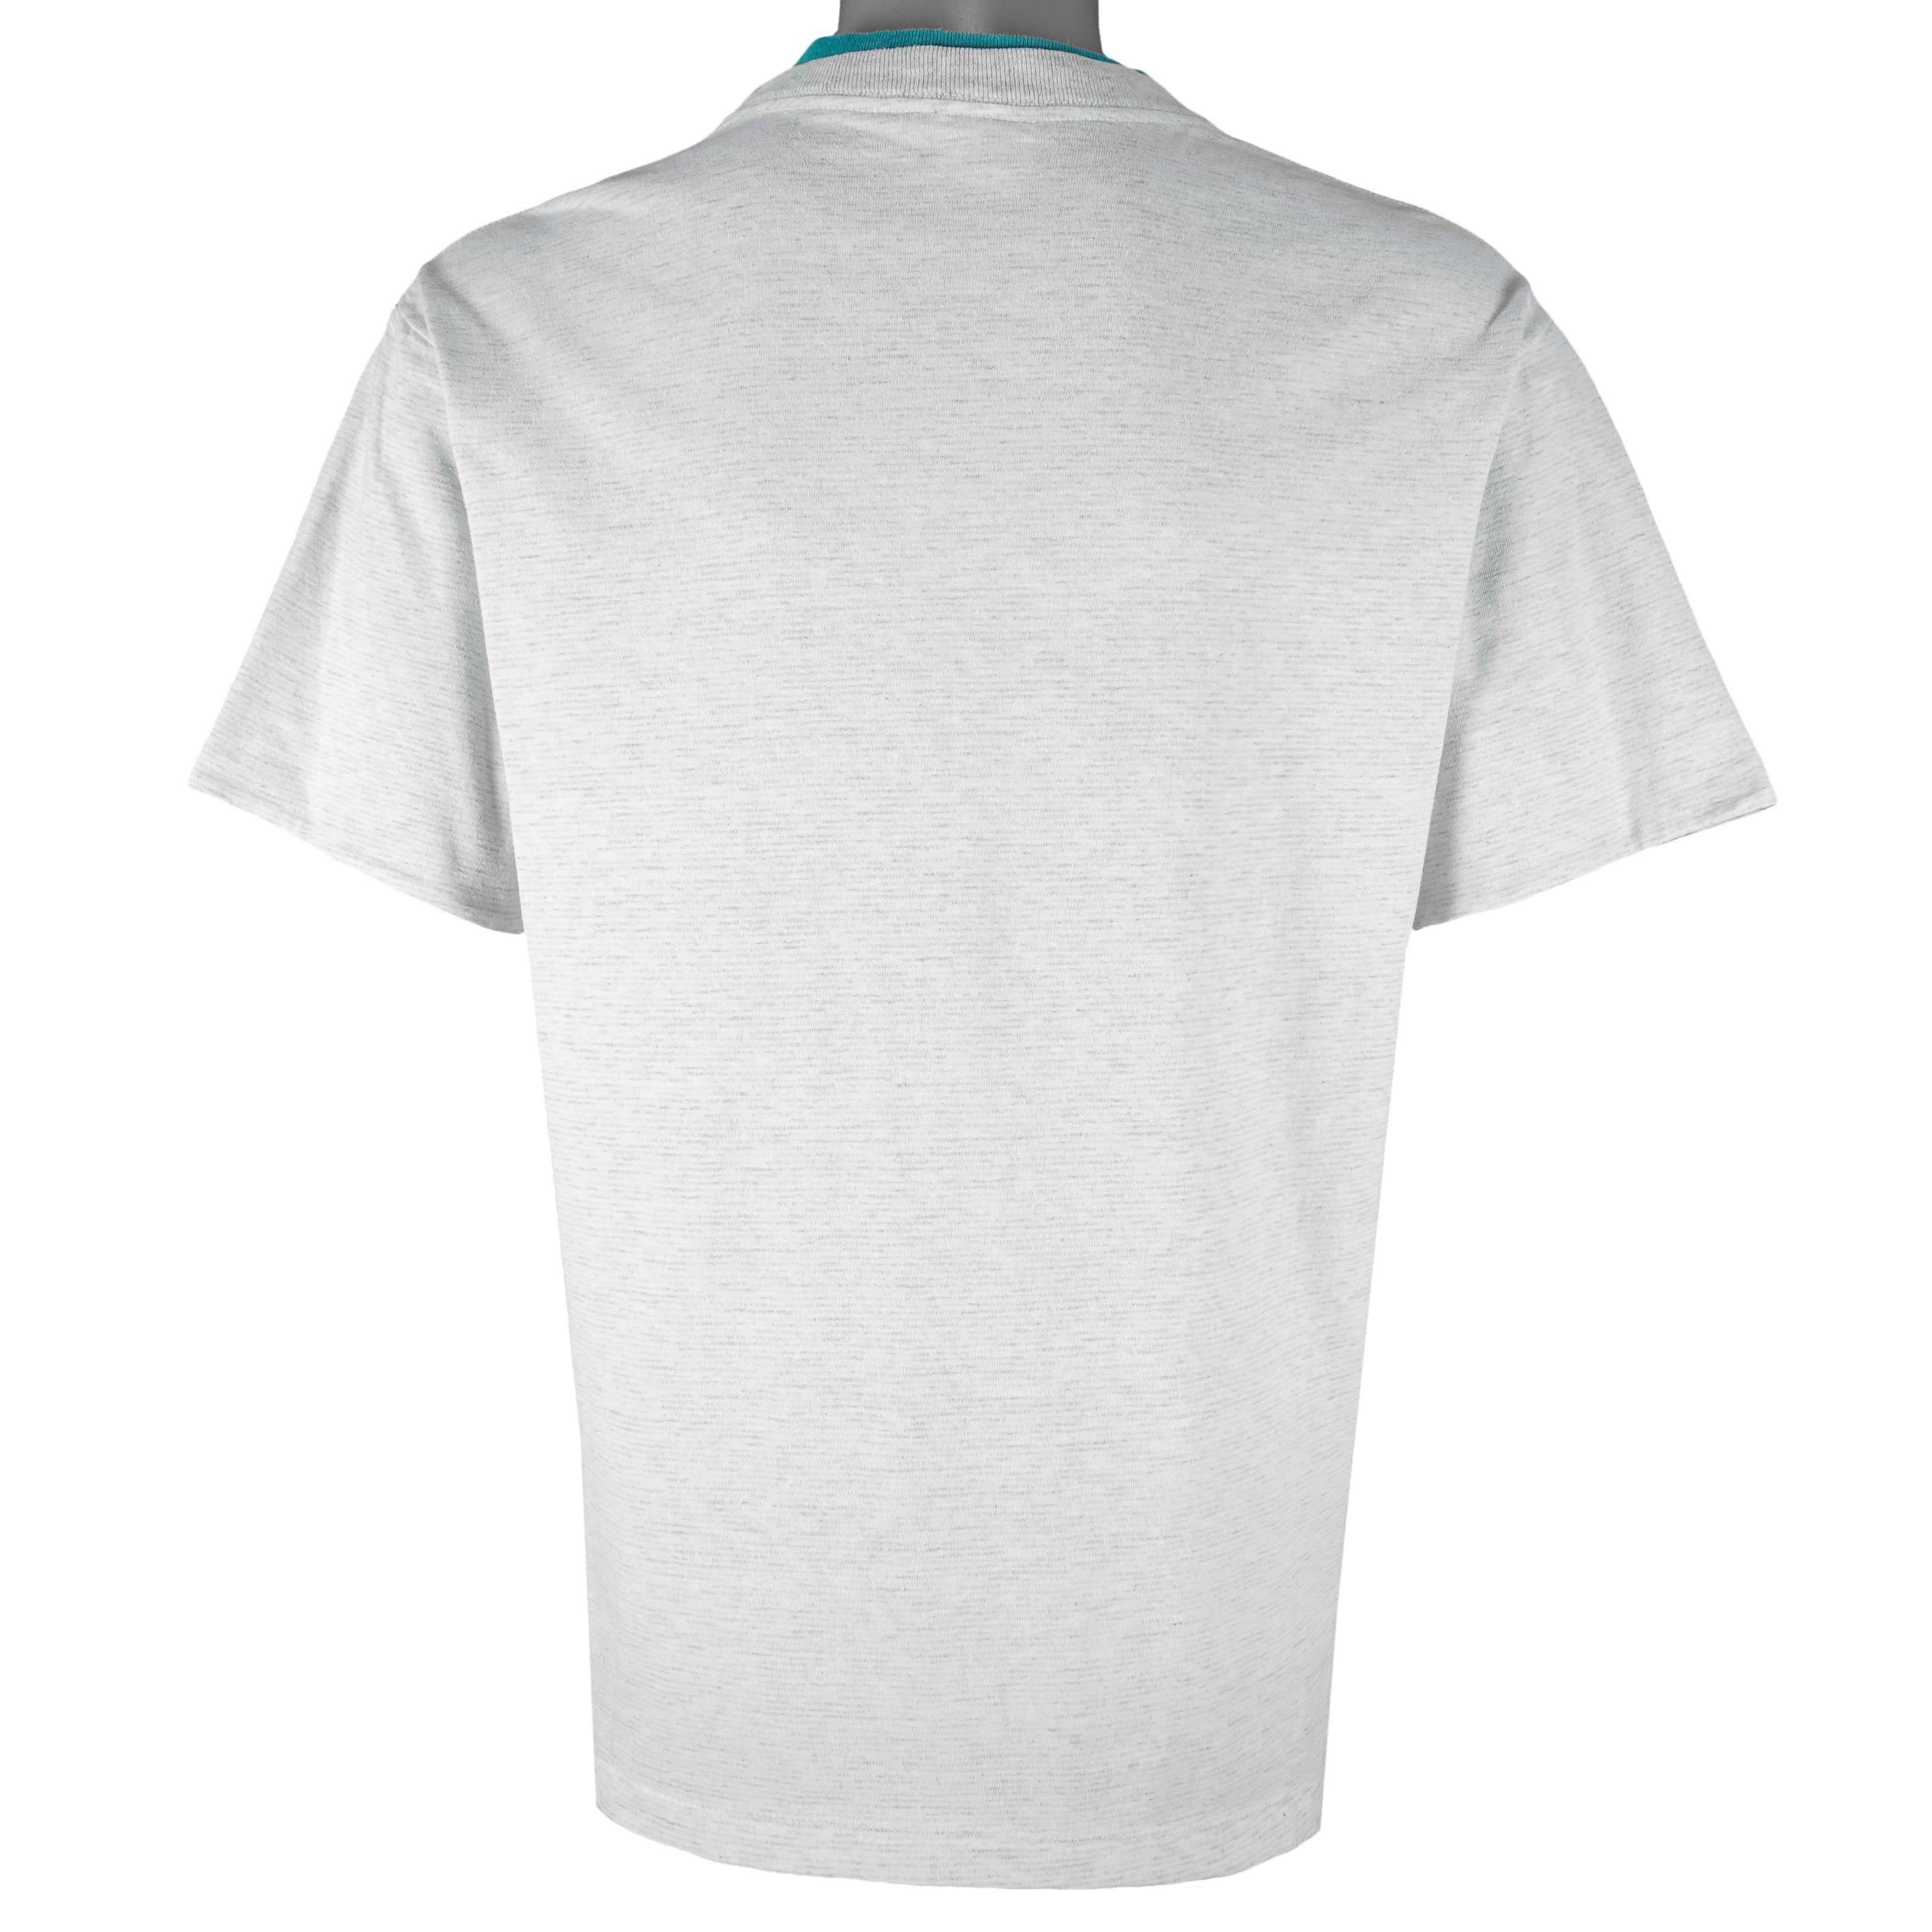 Aliexpress Vintage Florida Marlins Logo Design T-Shirt Oversized T Shirt Oversized T-Shirt Mens White T Shirts